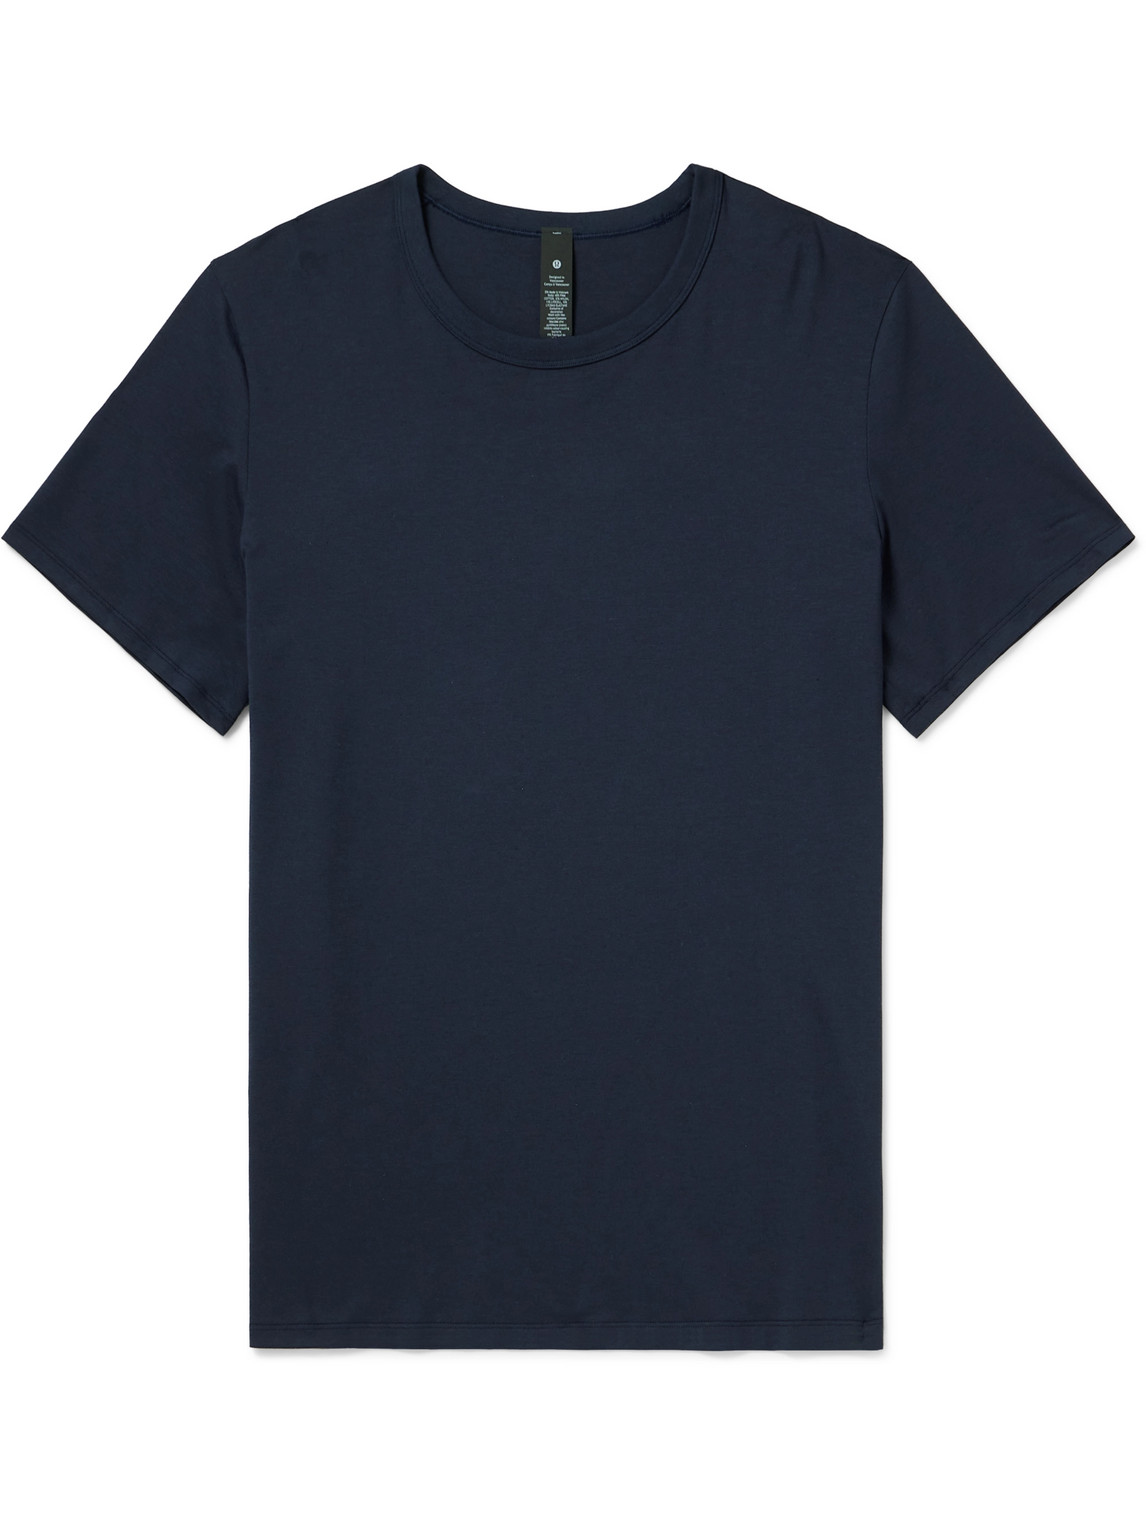 The Fundamental Jersey T-Shirt